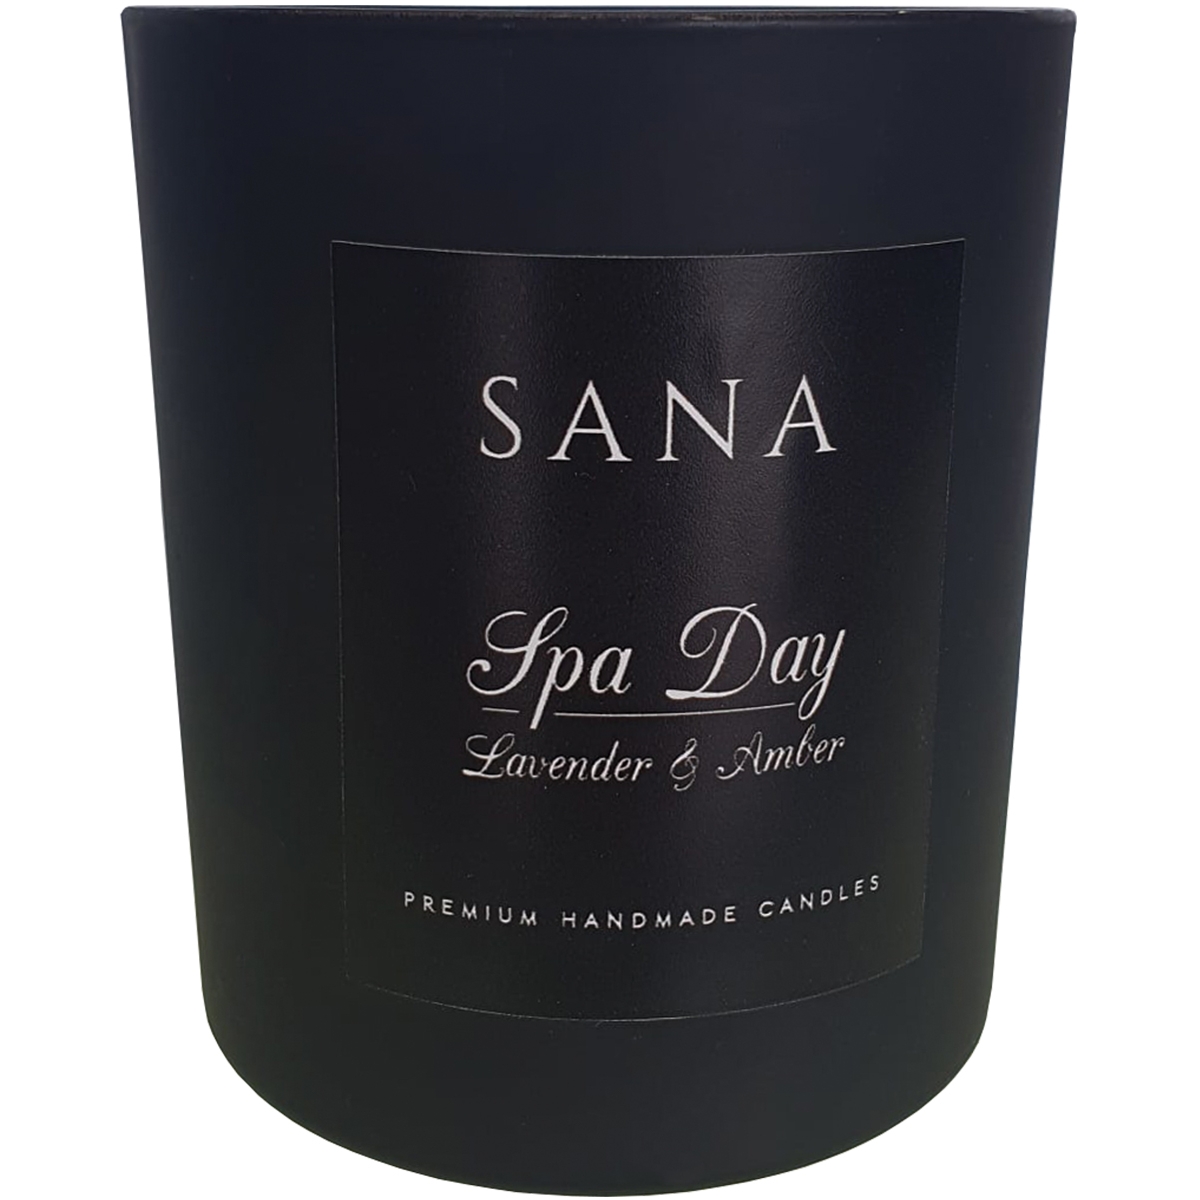 Spa Day Sana Perfumes, Profumo Per Ambienti, Arada Perfumes